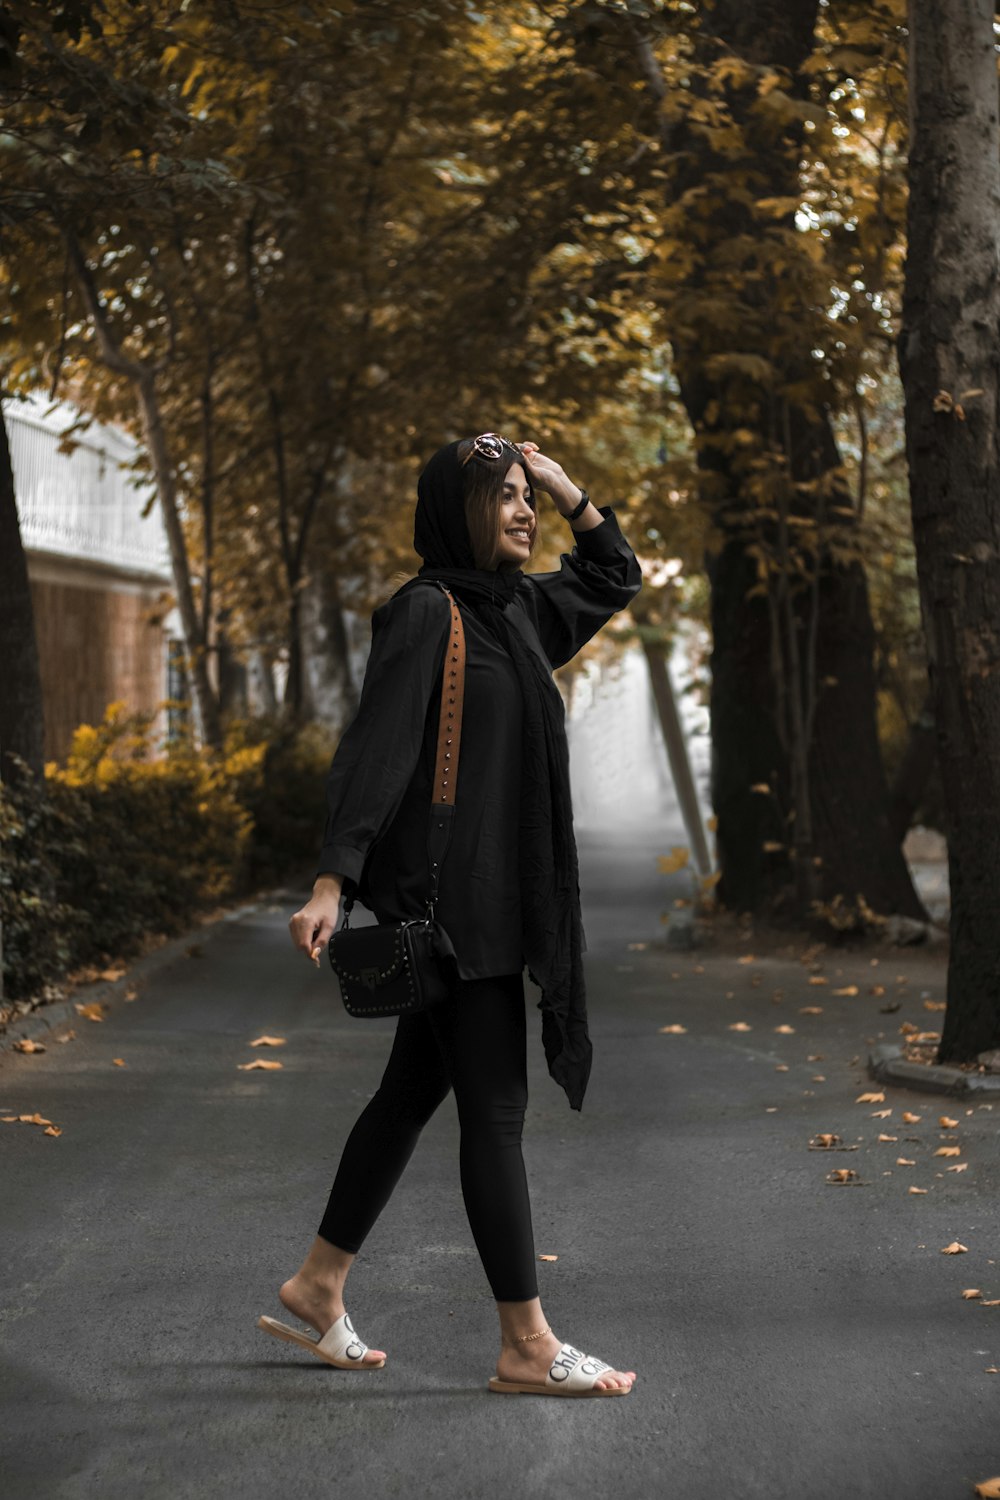 a woman walking down a road in a black jacket